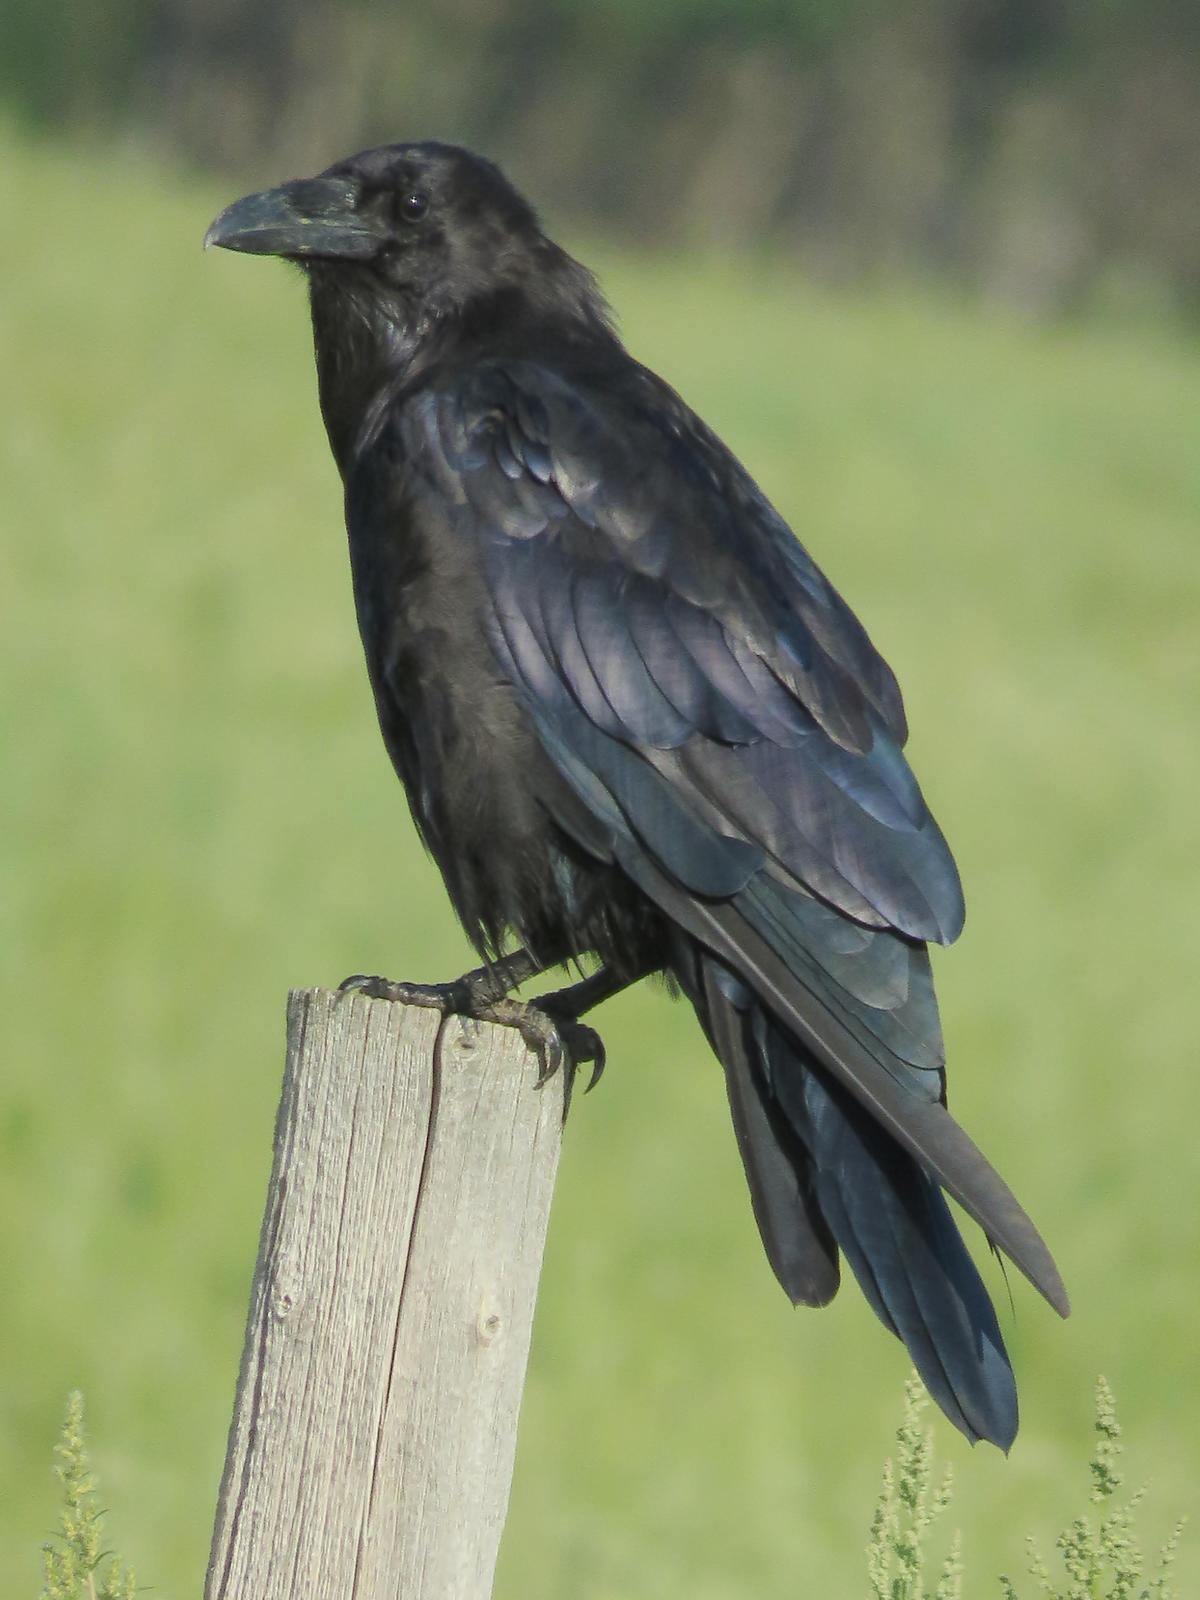 Common Raven Photo by Bob Neugebauer